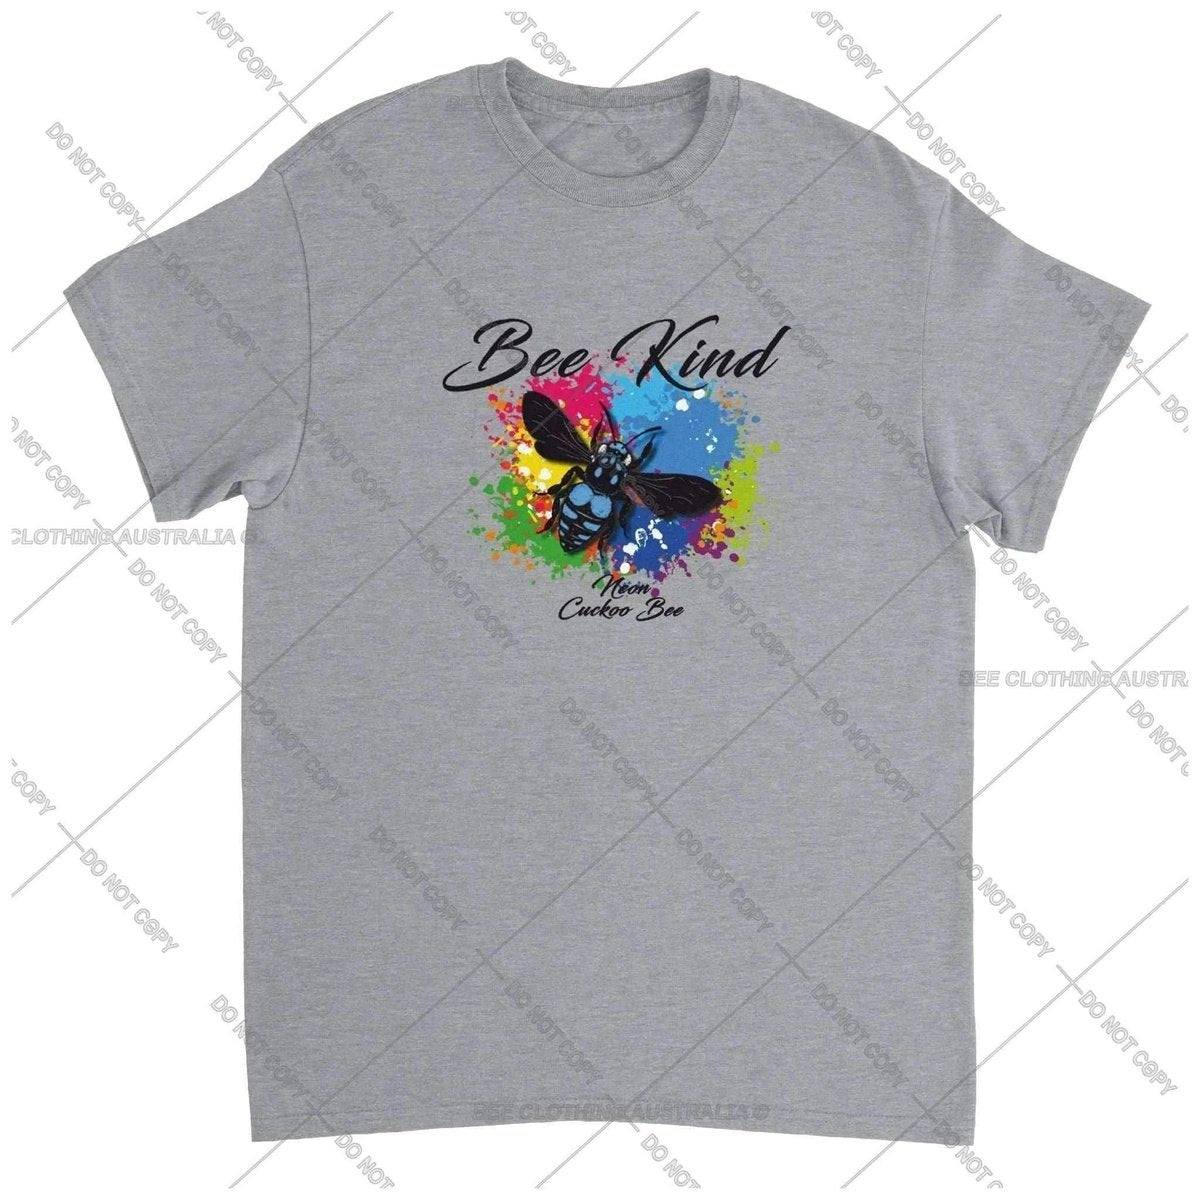 Bee Kind - Neon Cuckoo Bee - Native Bee T-Shirt Unisex - Classic Unisex Crewneck T-shirt Australia Online Color Sports Grey / S